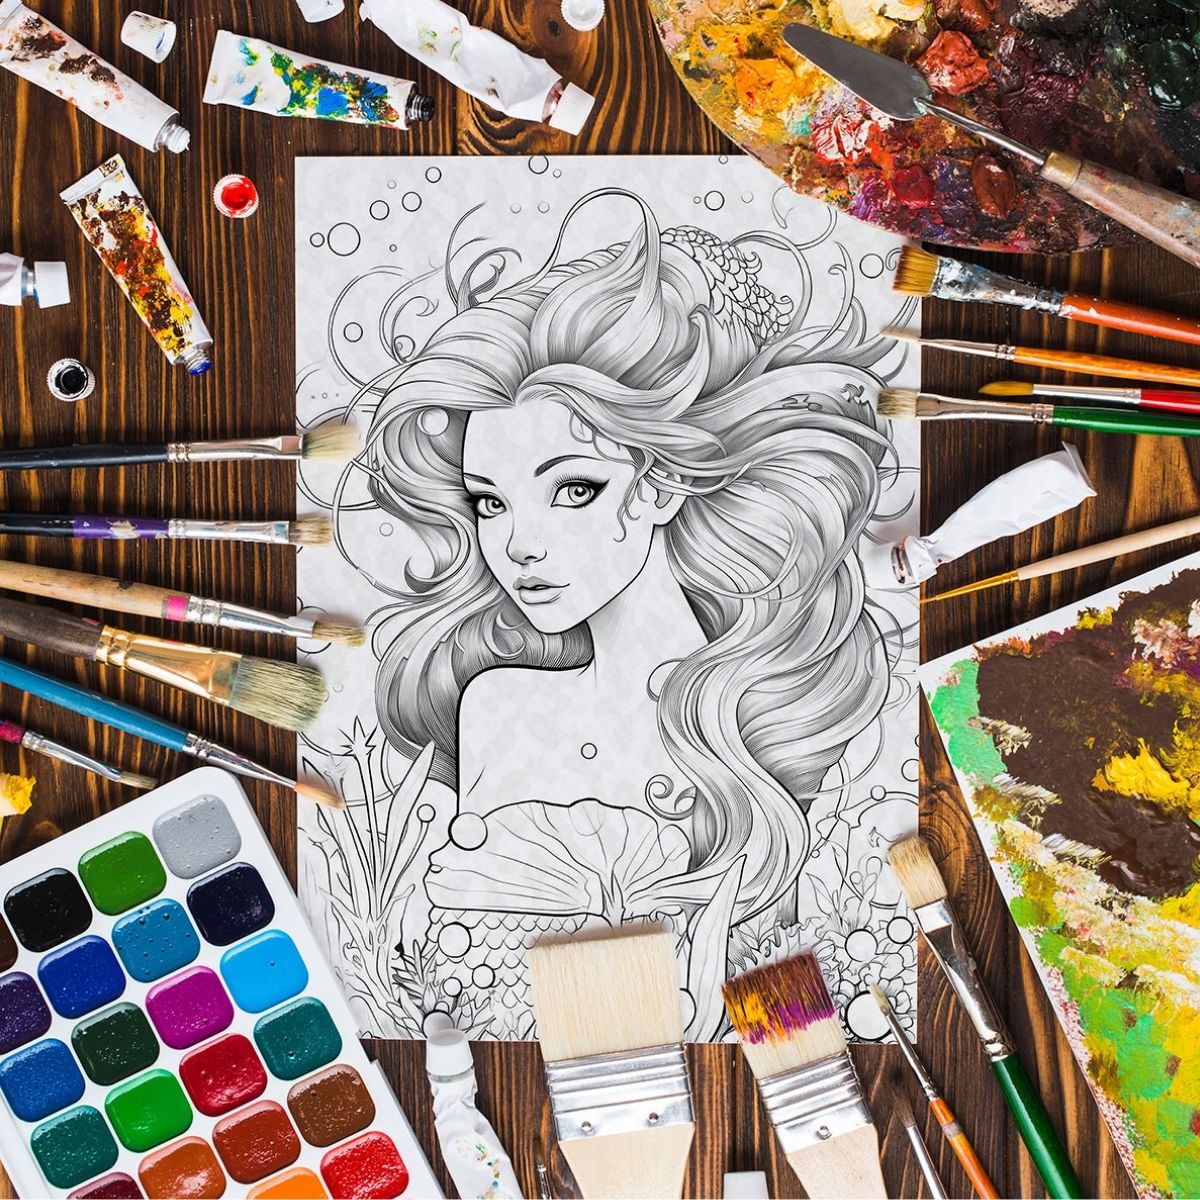 Mermaid Portraits - Digital Coloring Book - Click Image to Close